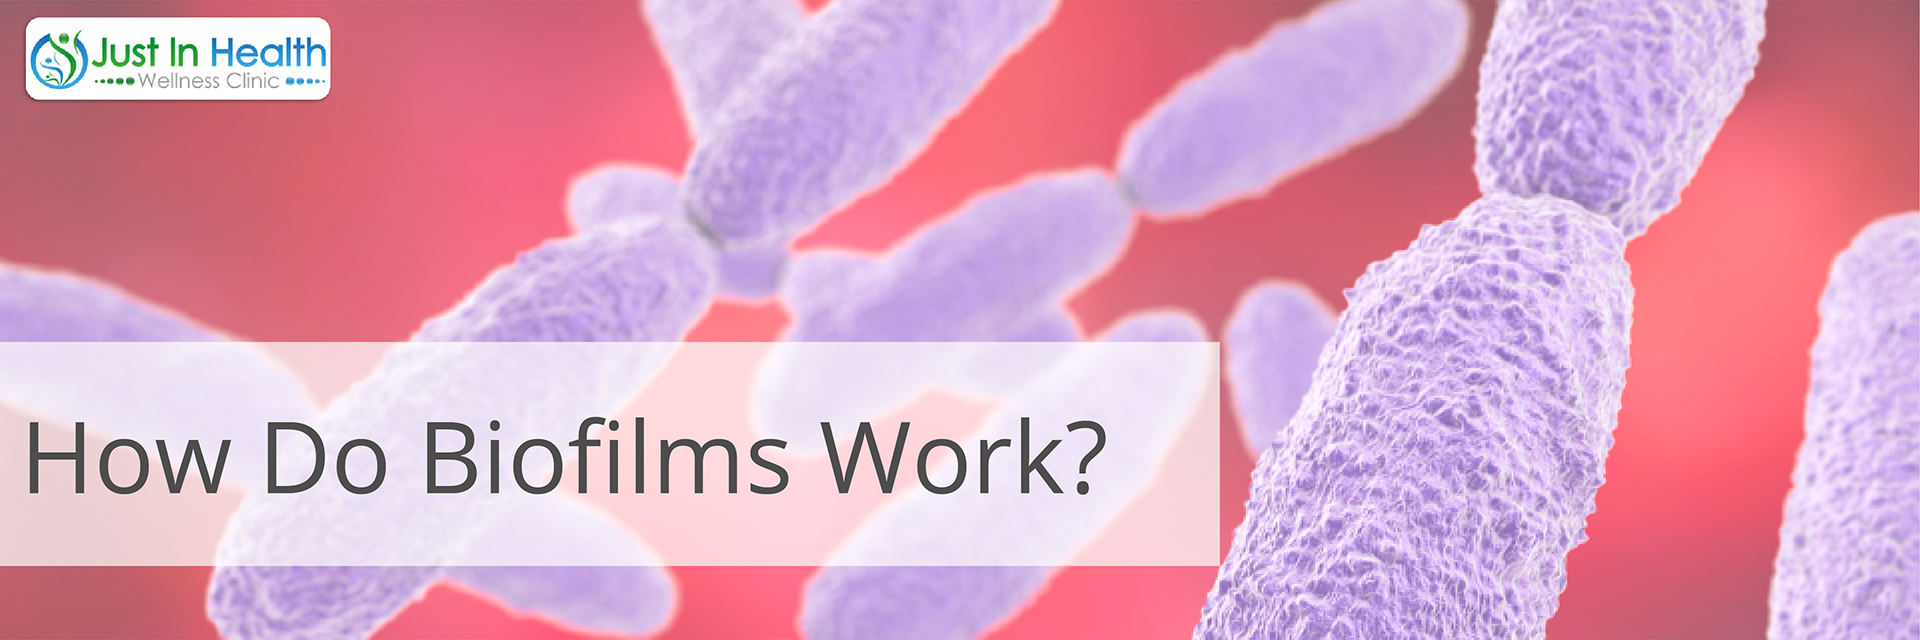 How do biofilms work?